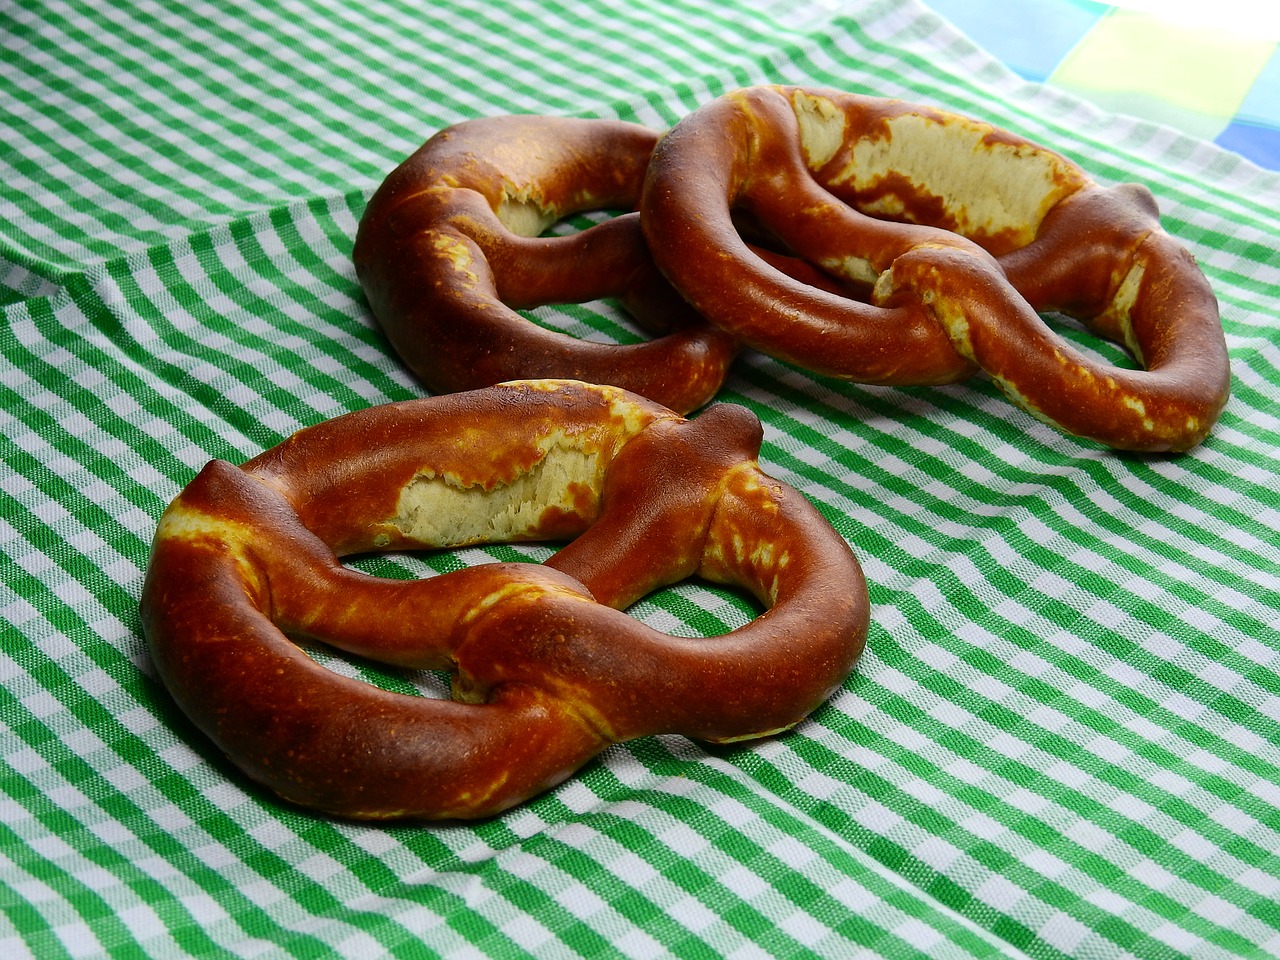 pretzel baked goods baked free photo